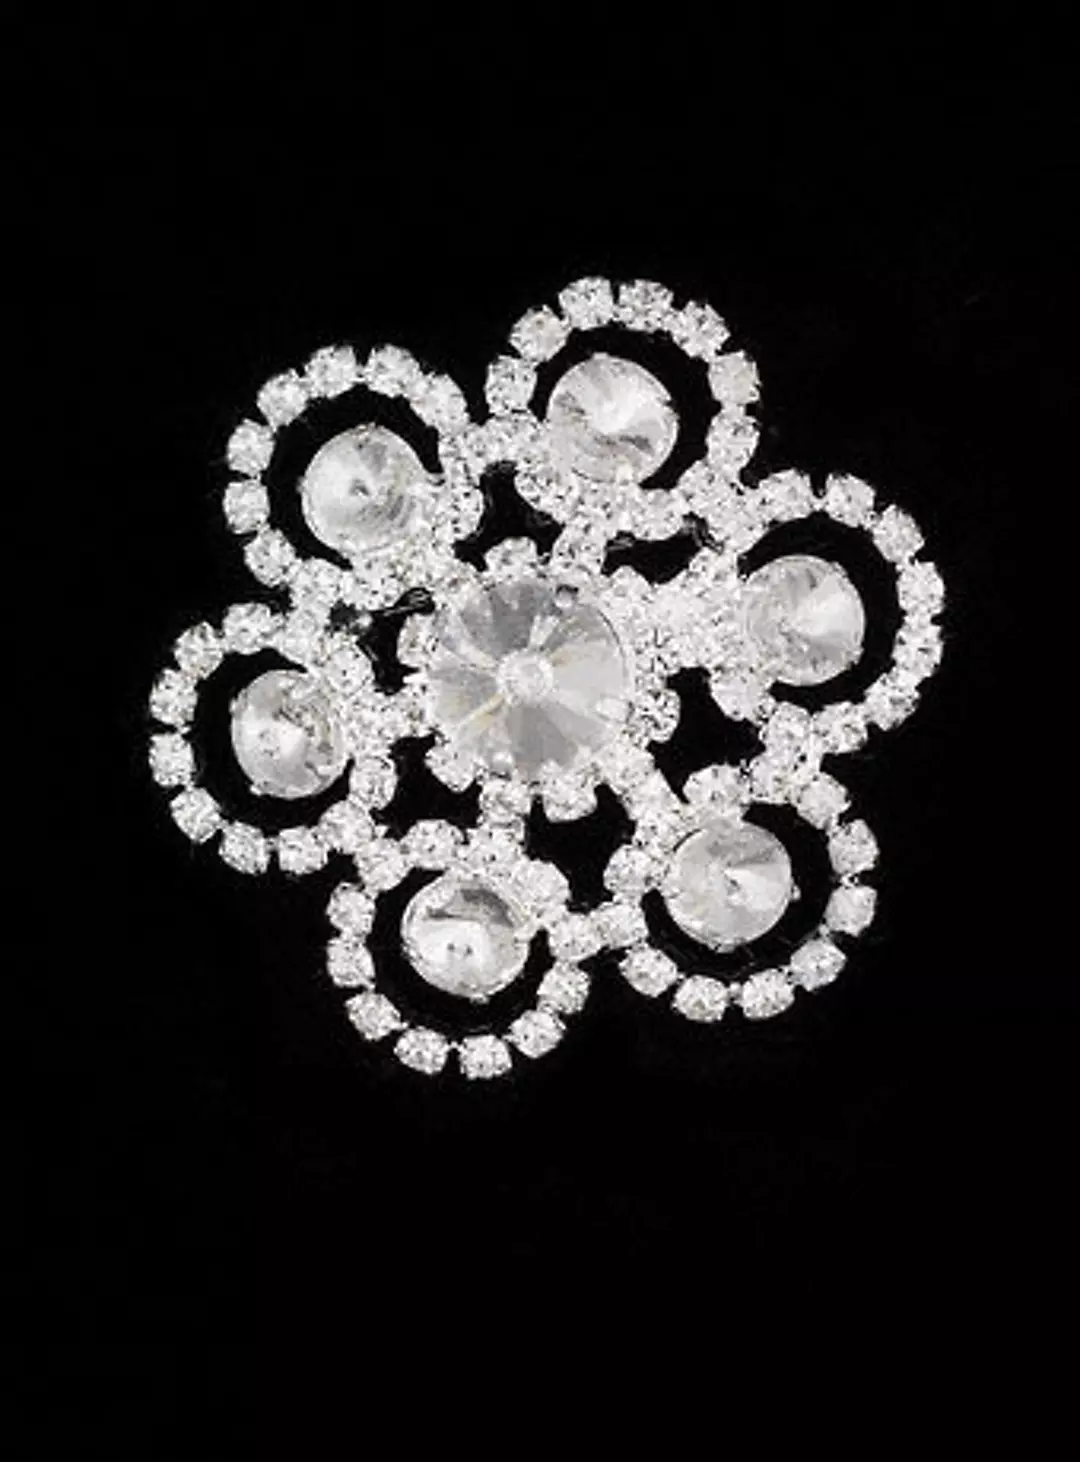 Crystal flower brooch Image